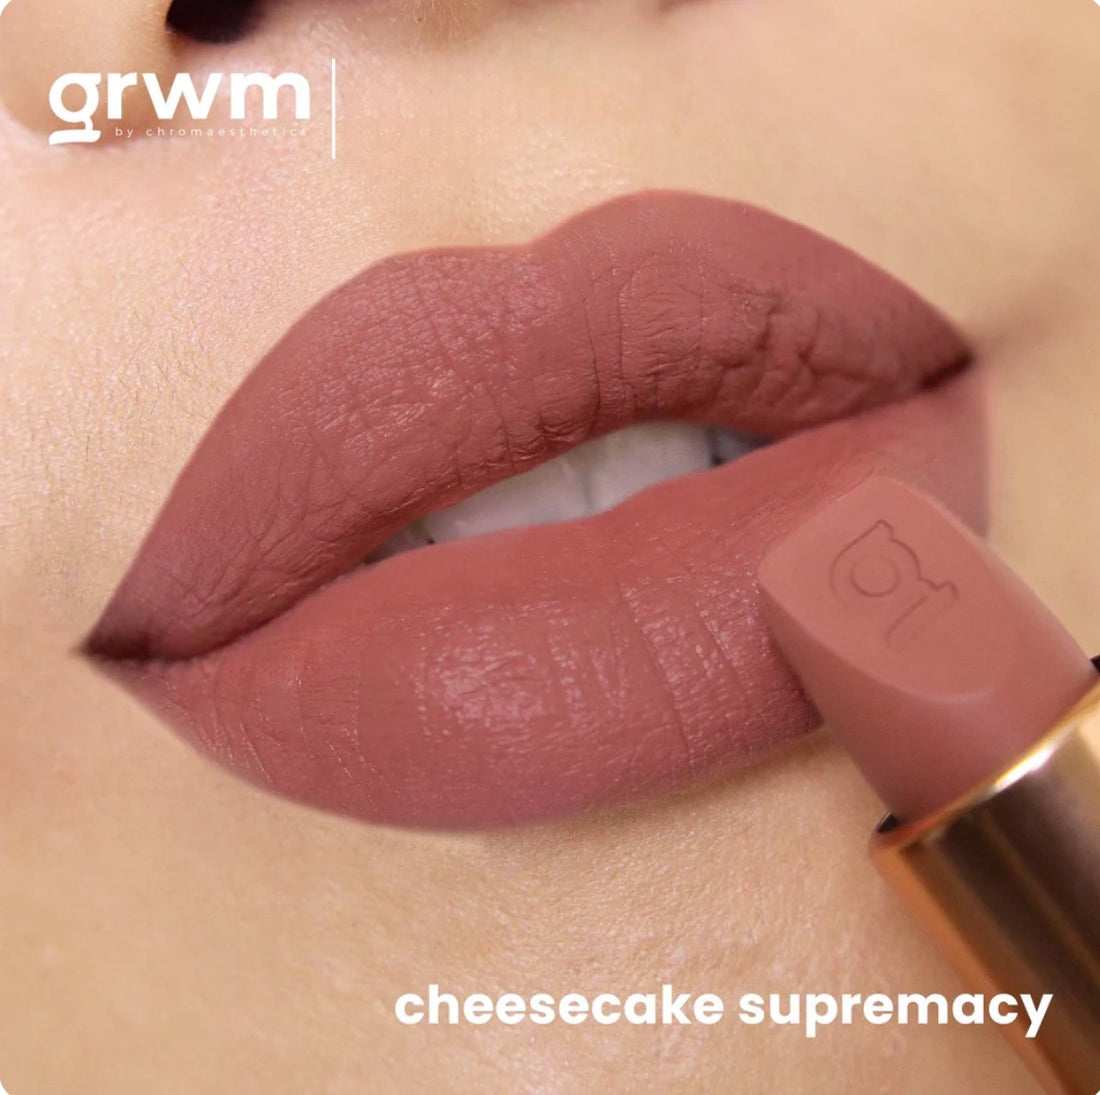 GRWM Cosmetics Lip Speak A True Matte Lipstick (3 Shades)